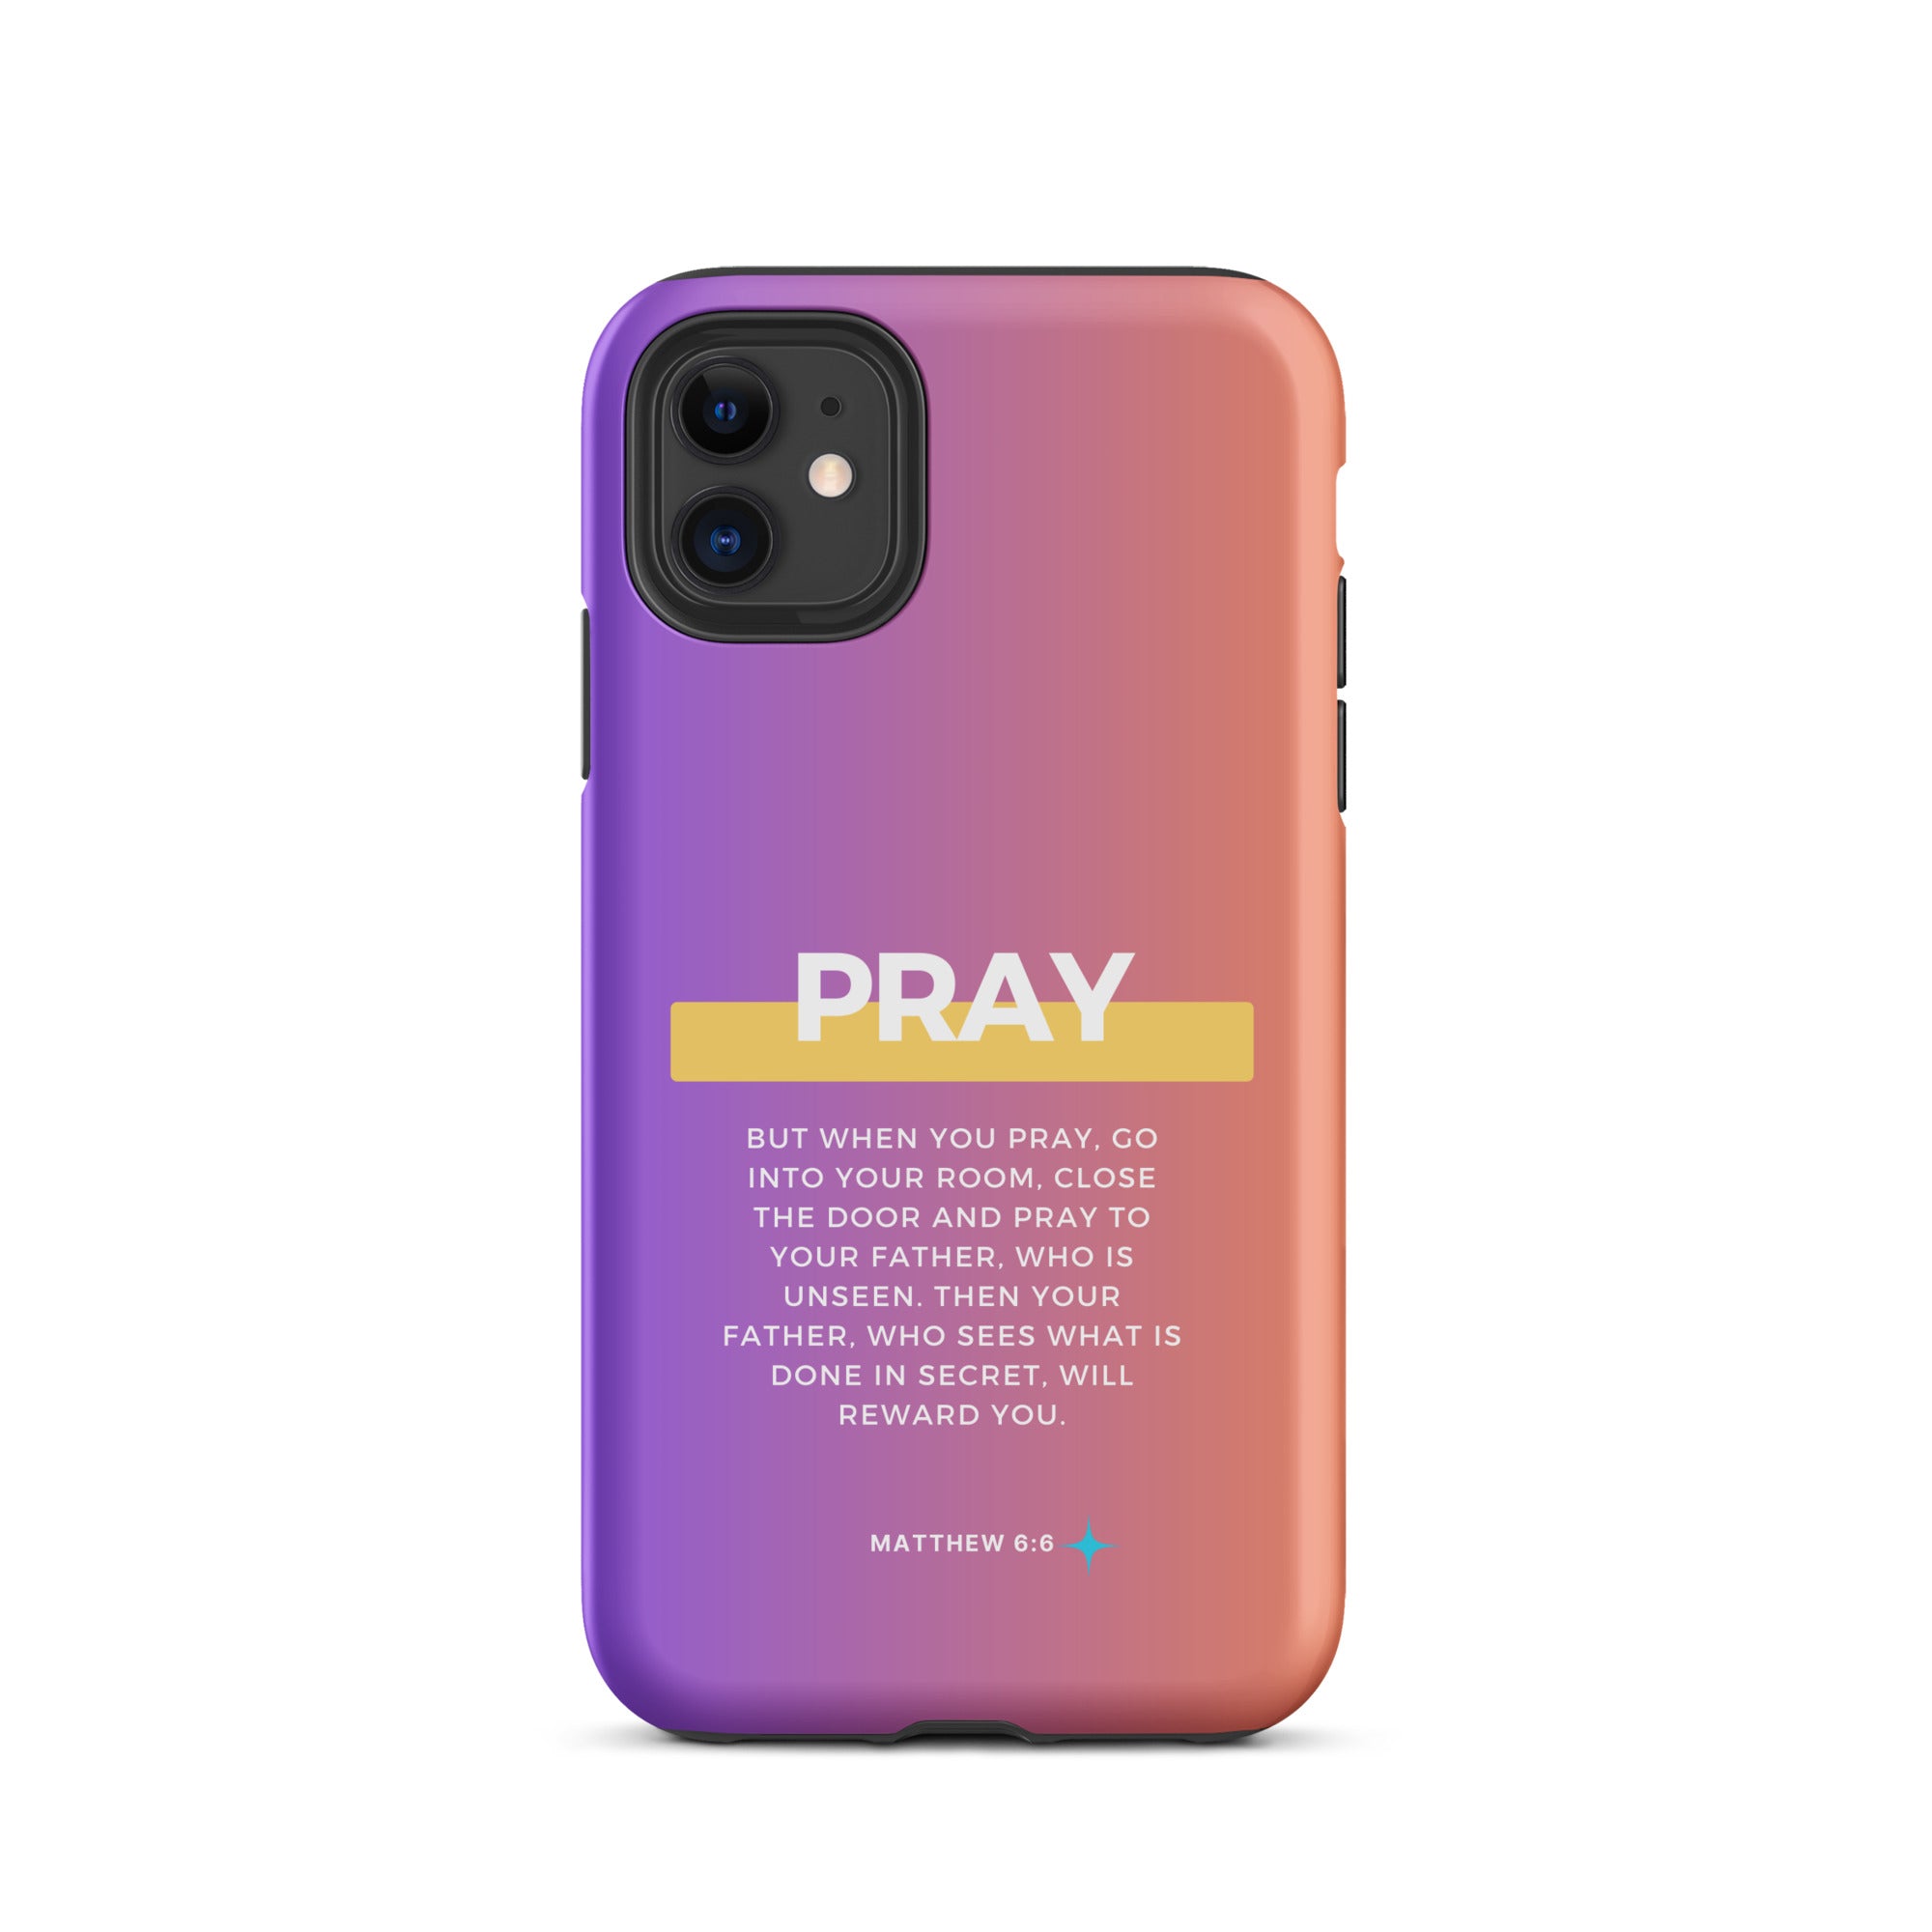 iPhone Case - Matthew 6:6